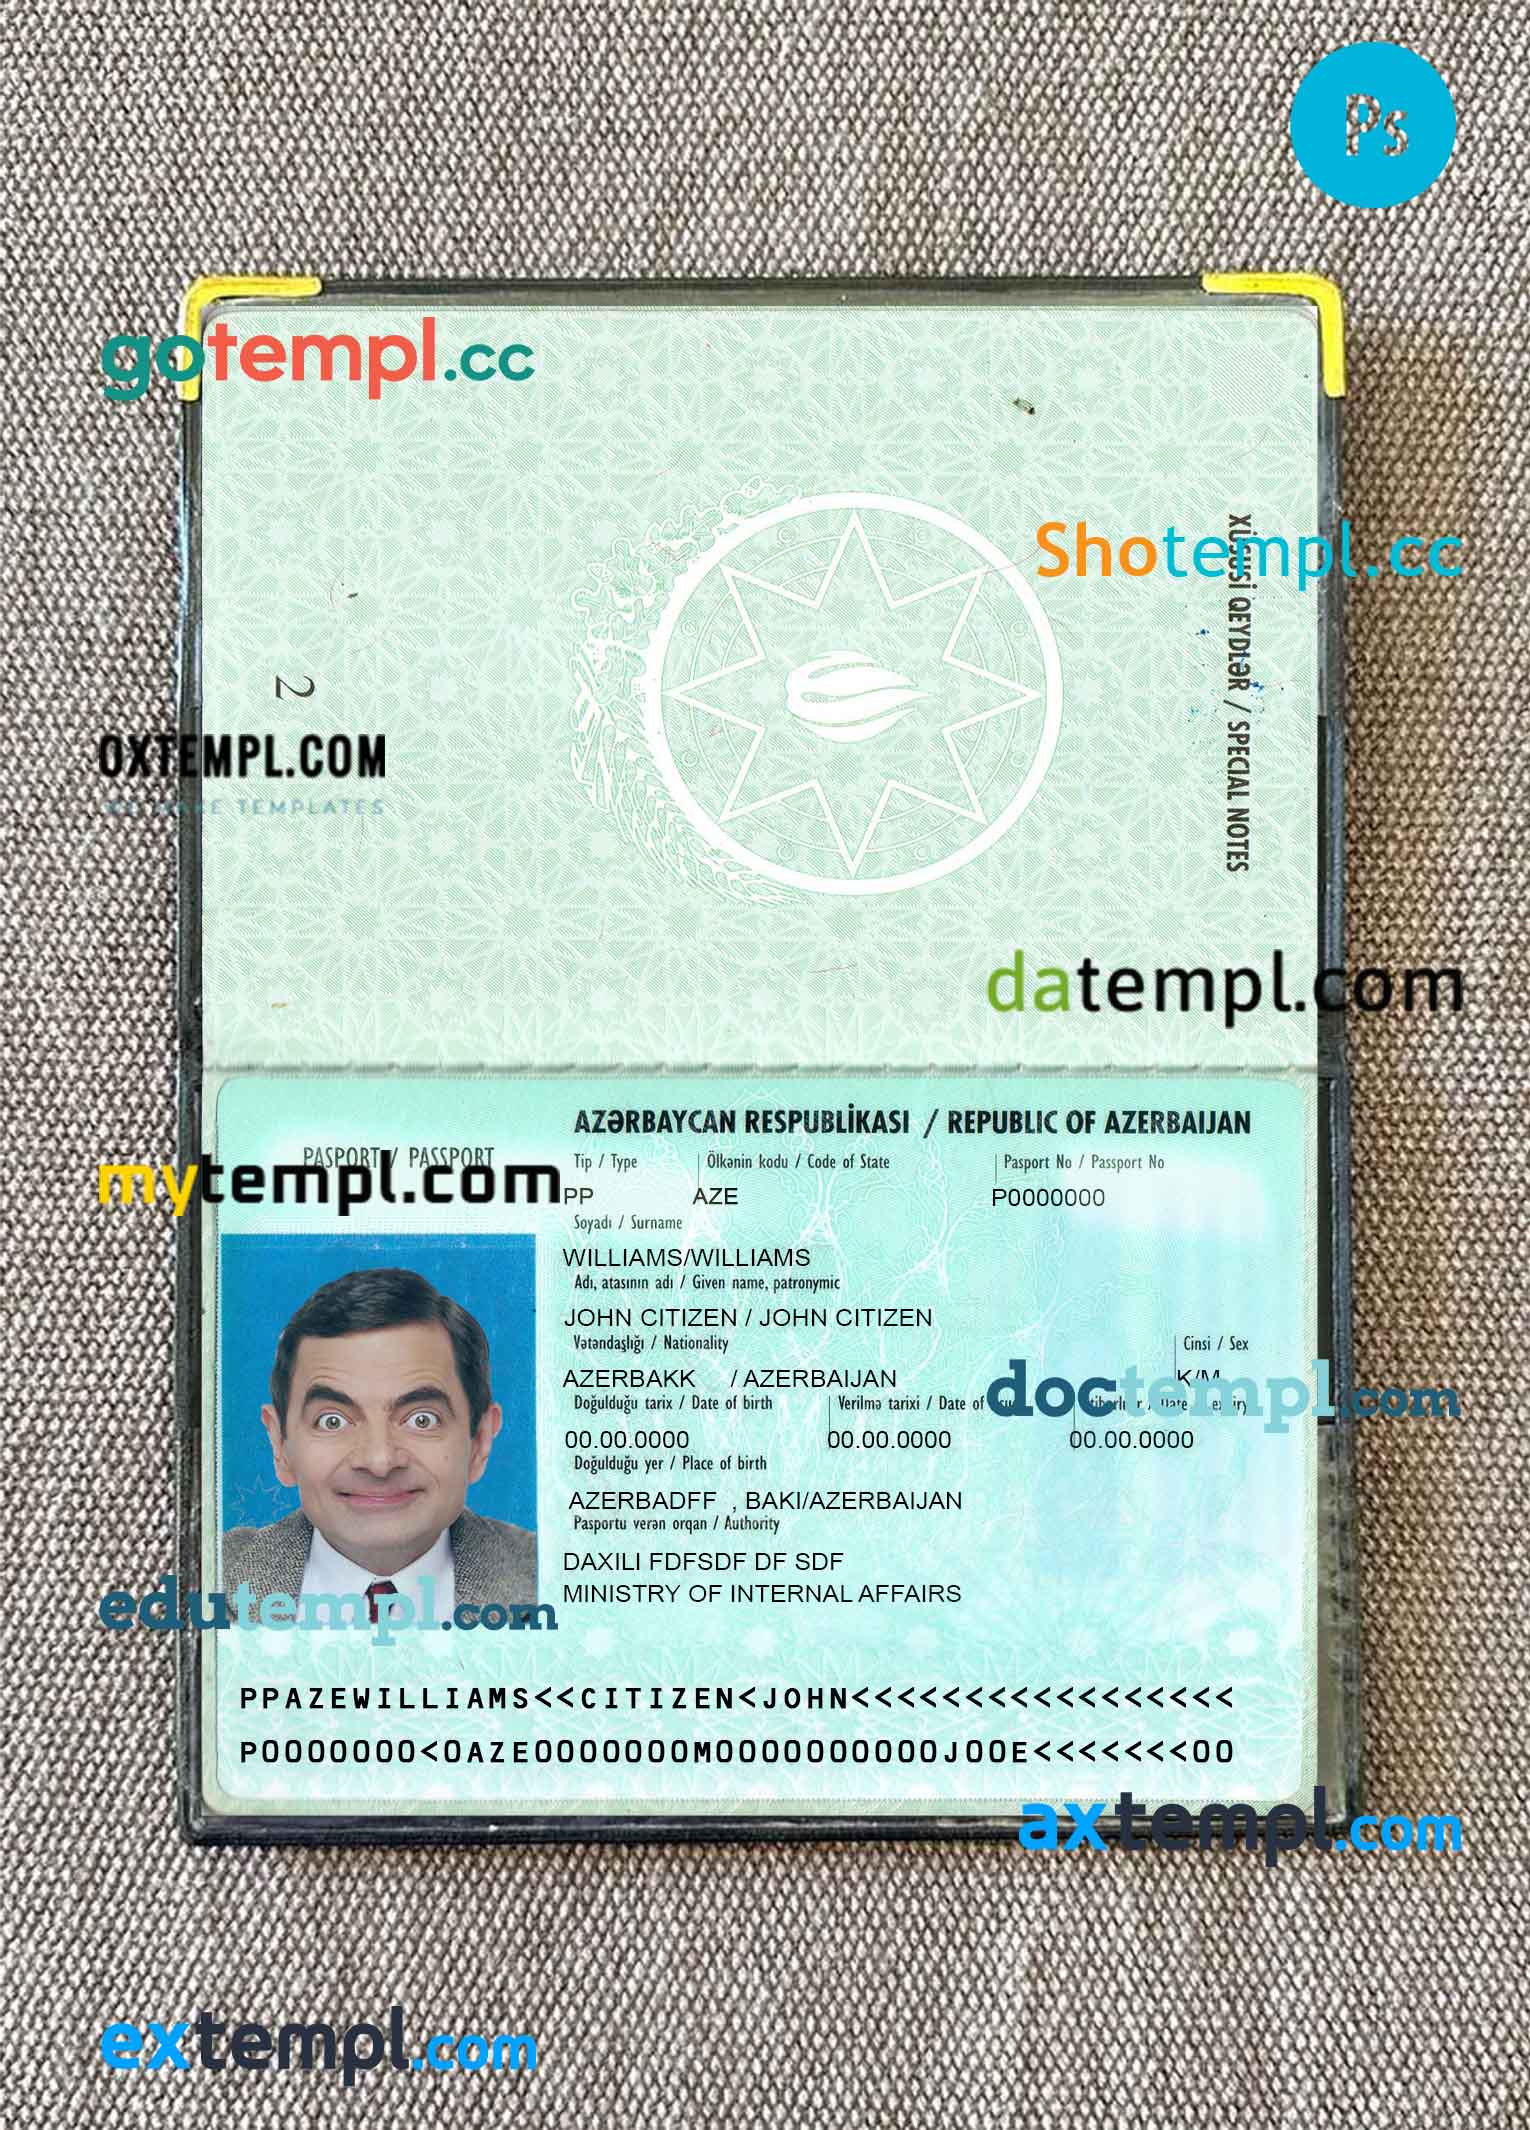 Sierra Leone Bank of Sierra Leone visa card fully editable template in PSD format